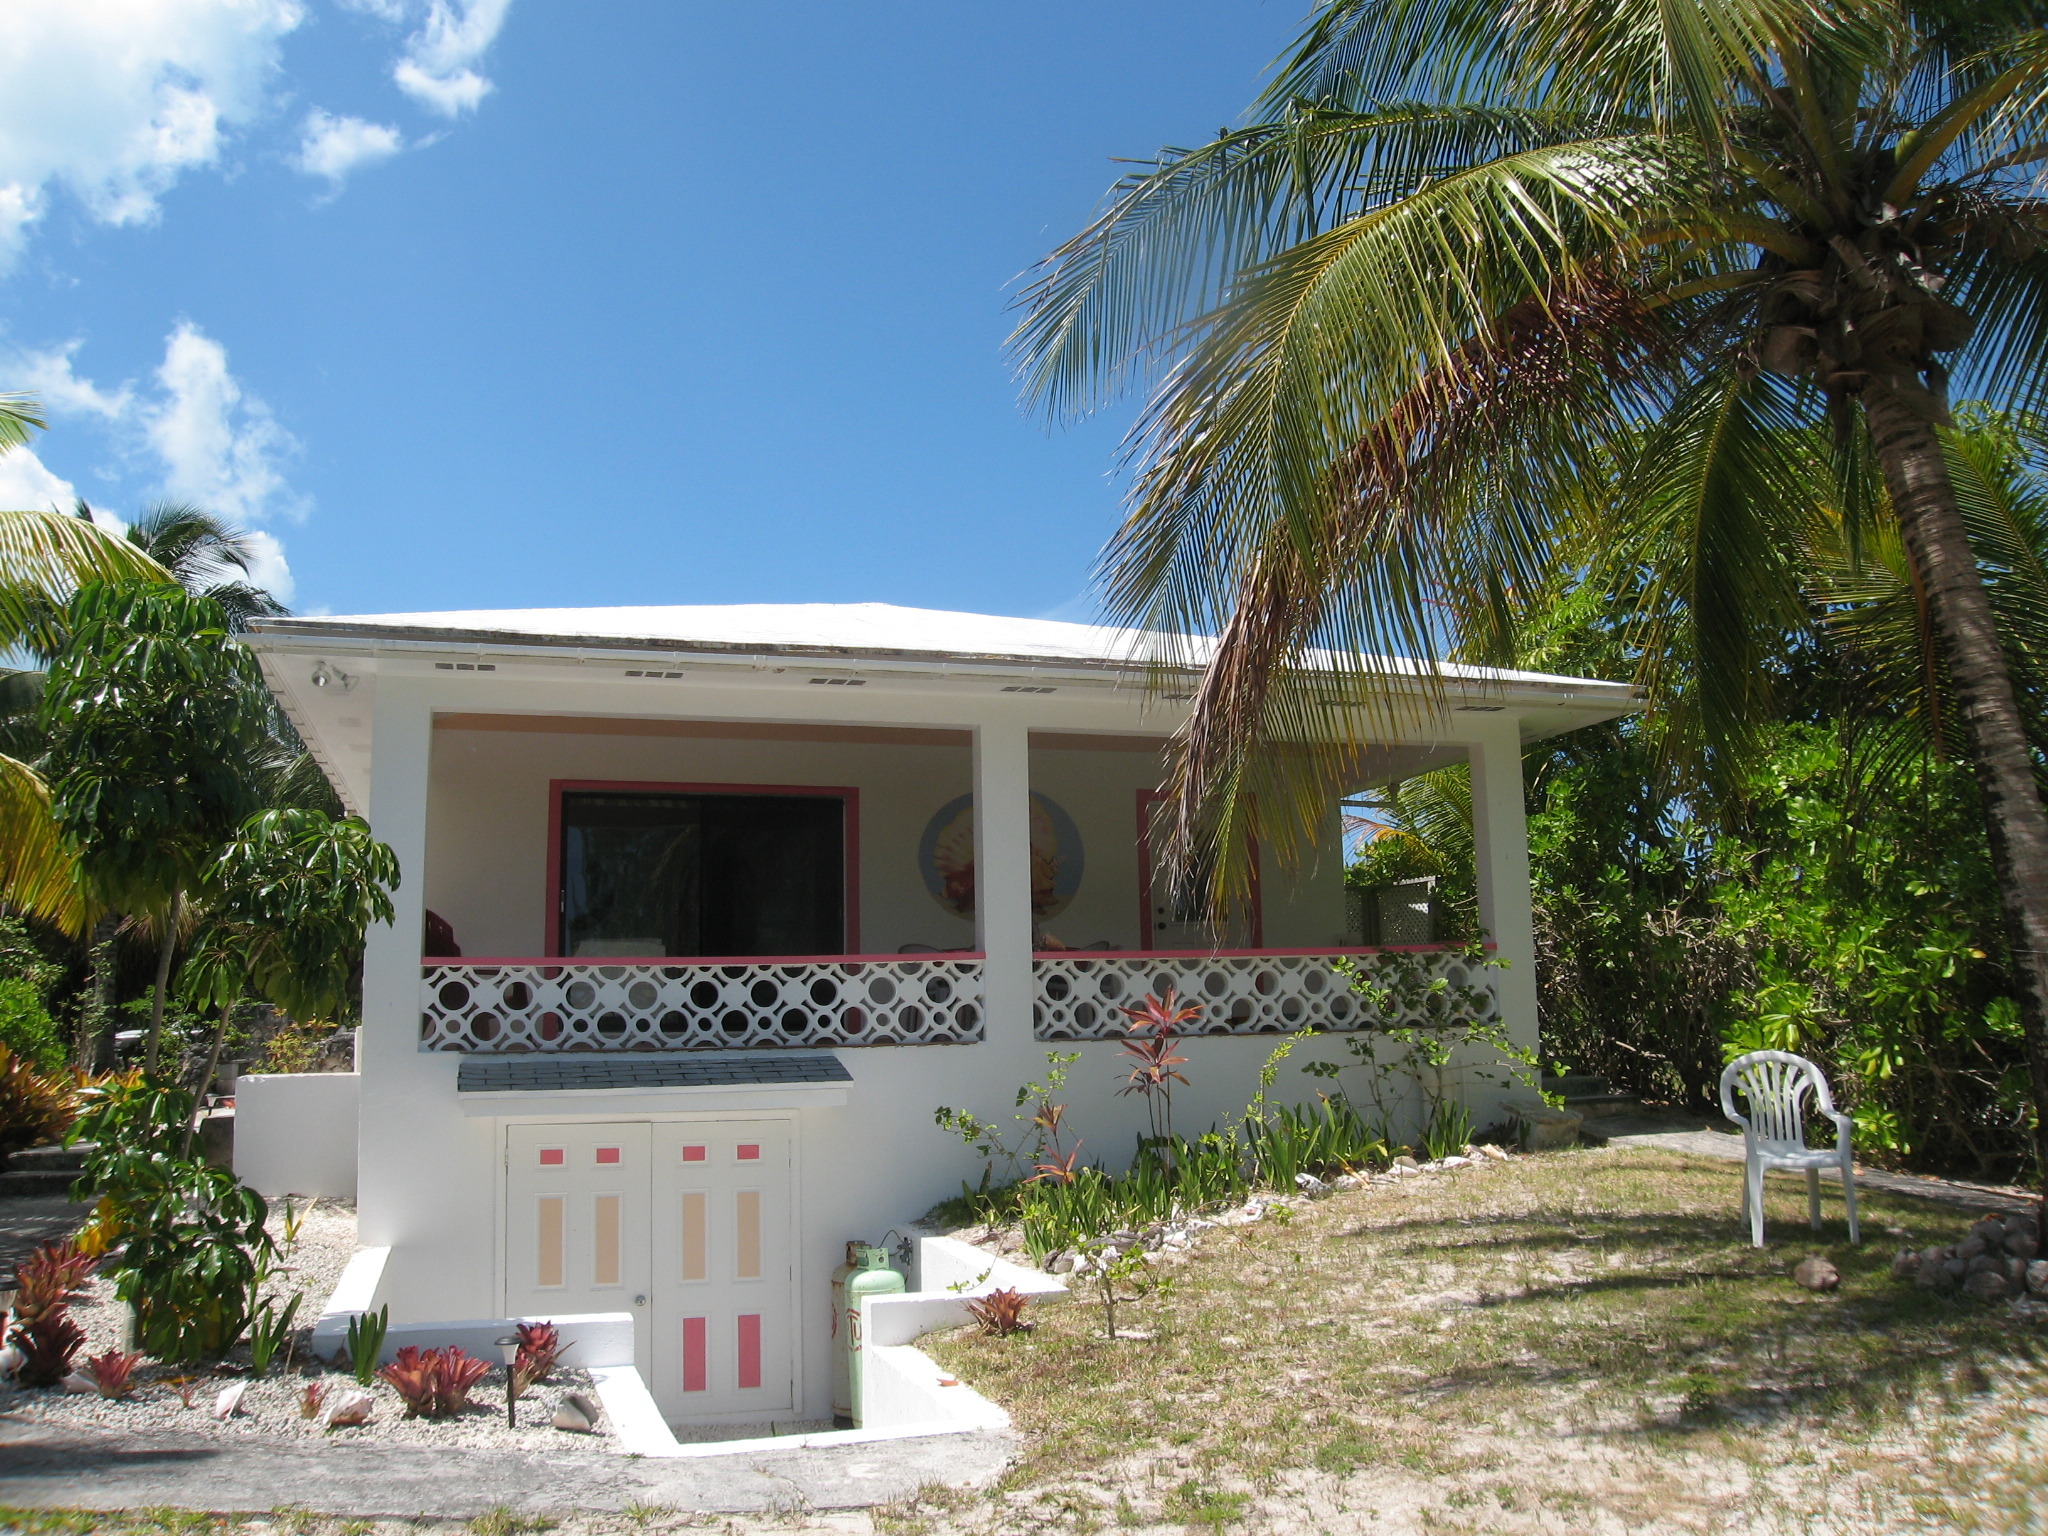 Spanish Wells Bahamas beach house rentals 